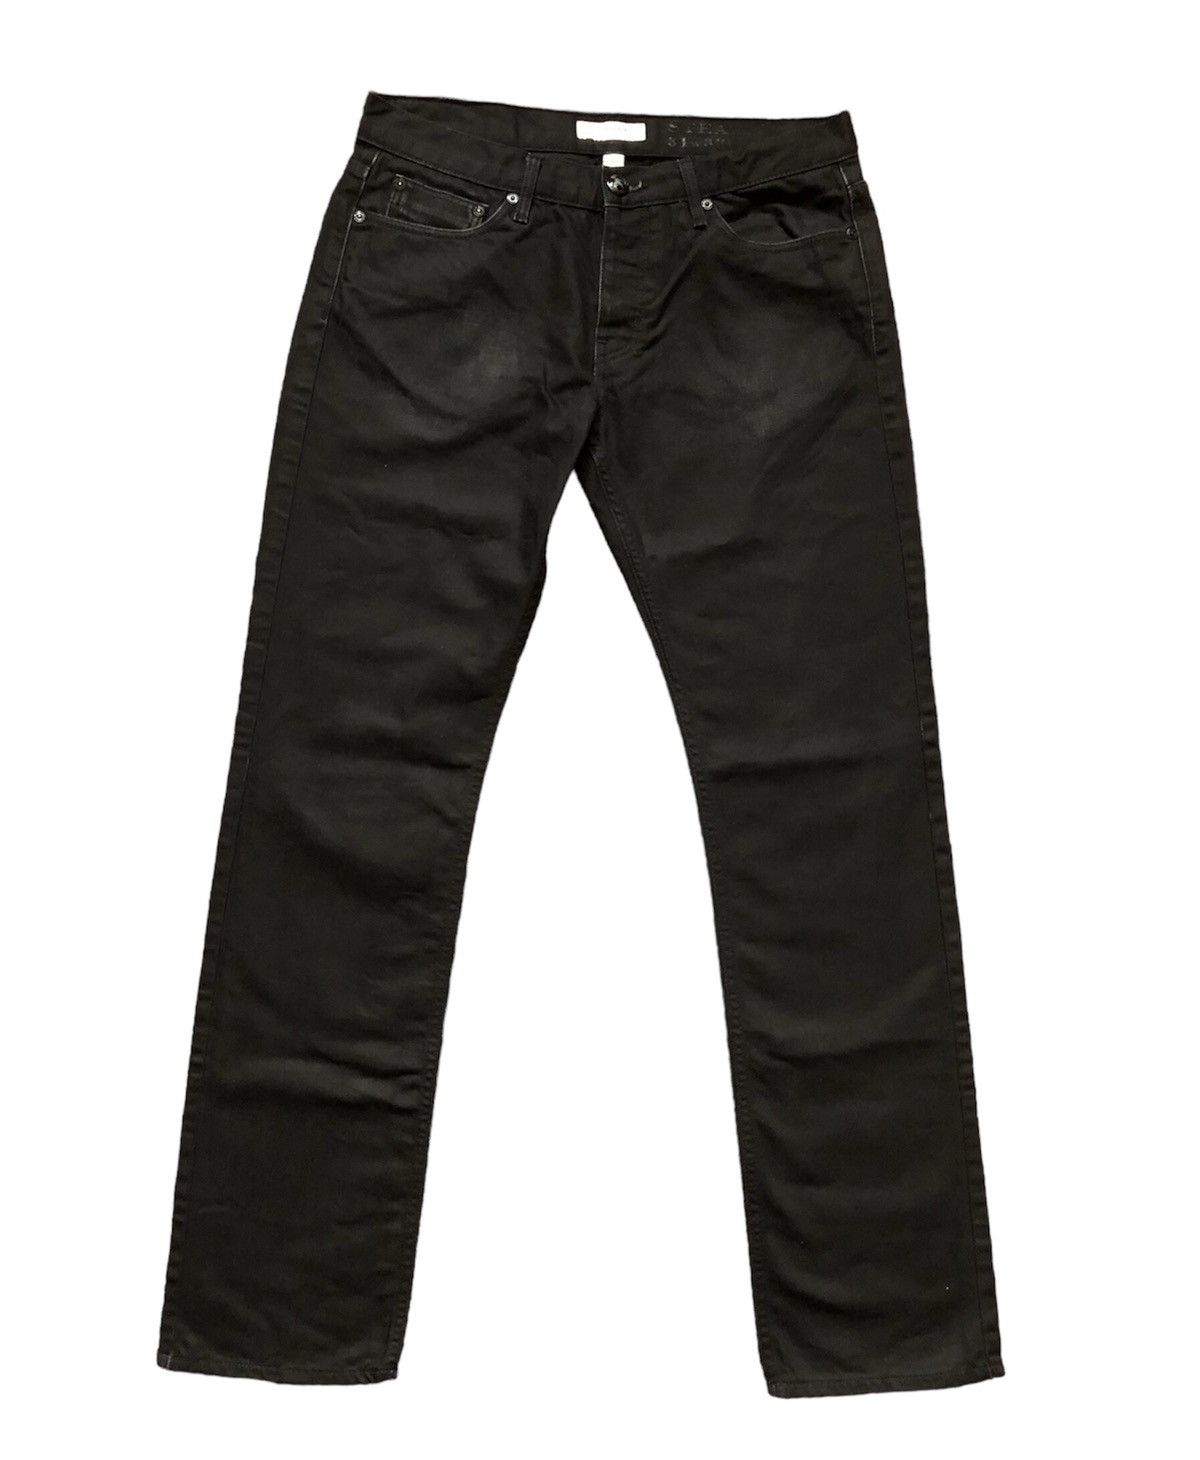 Burberry Burberry Steadman jeans black 31/32 size | Grailed